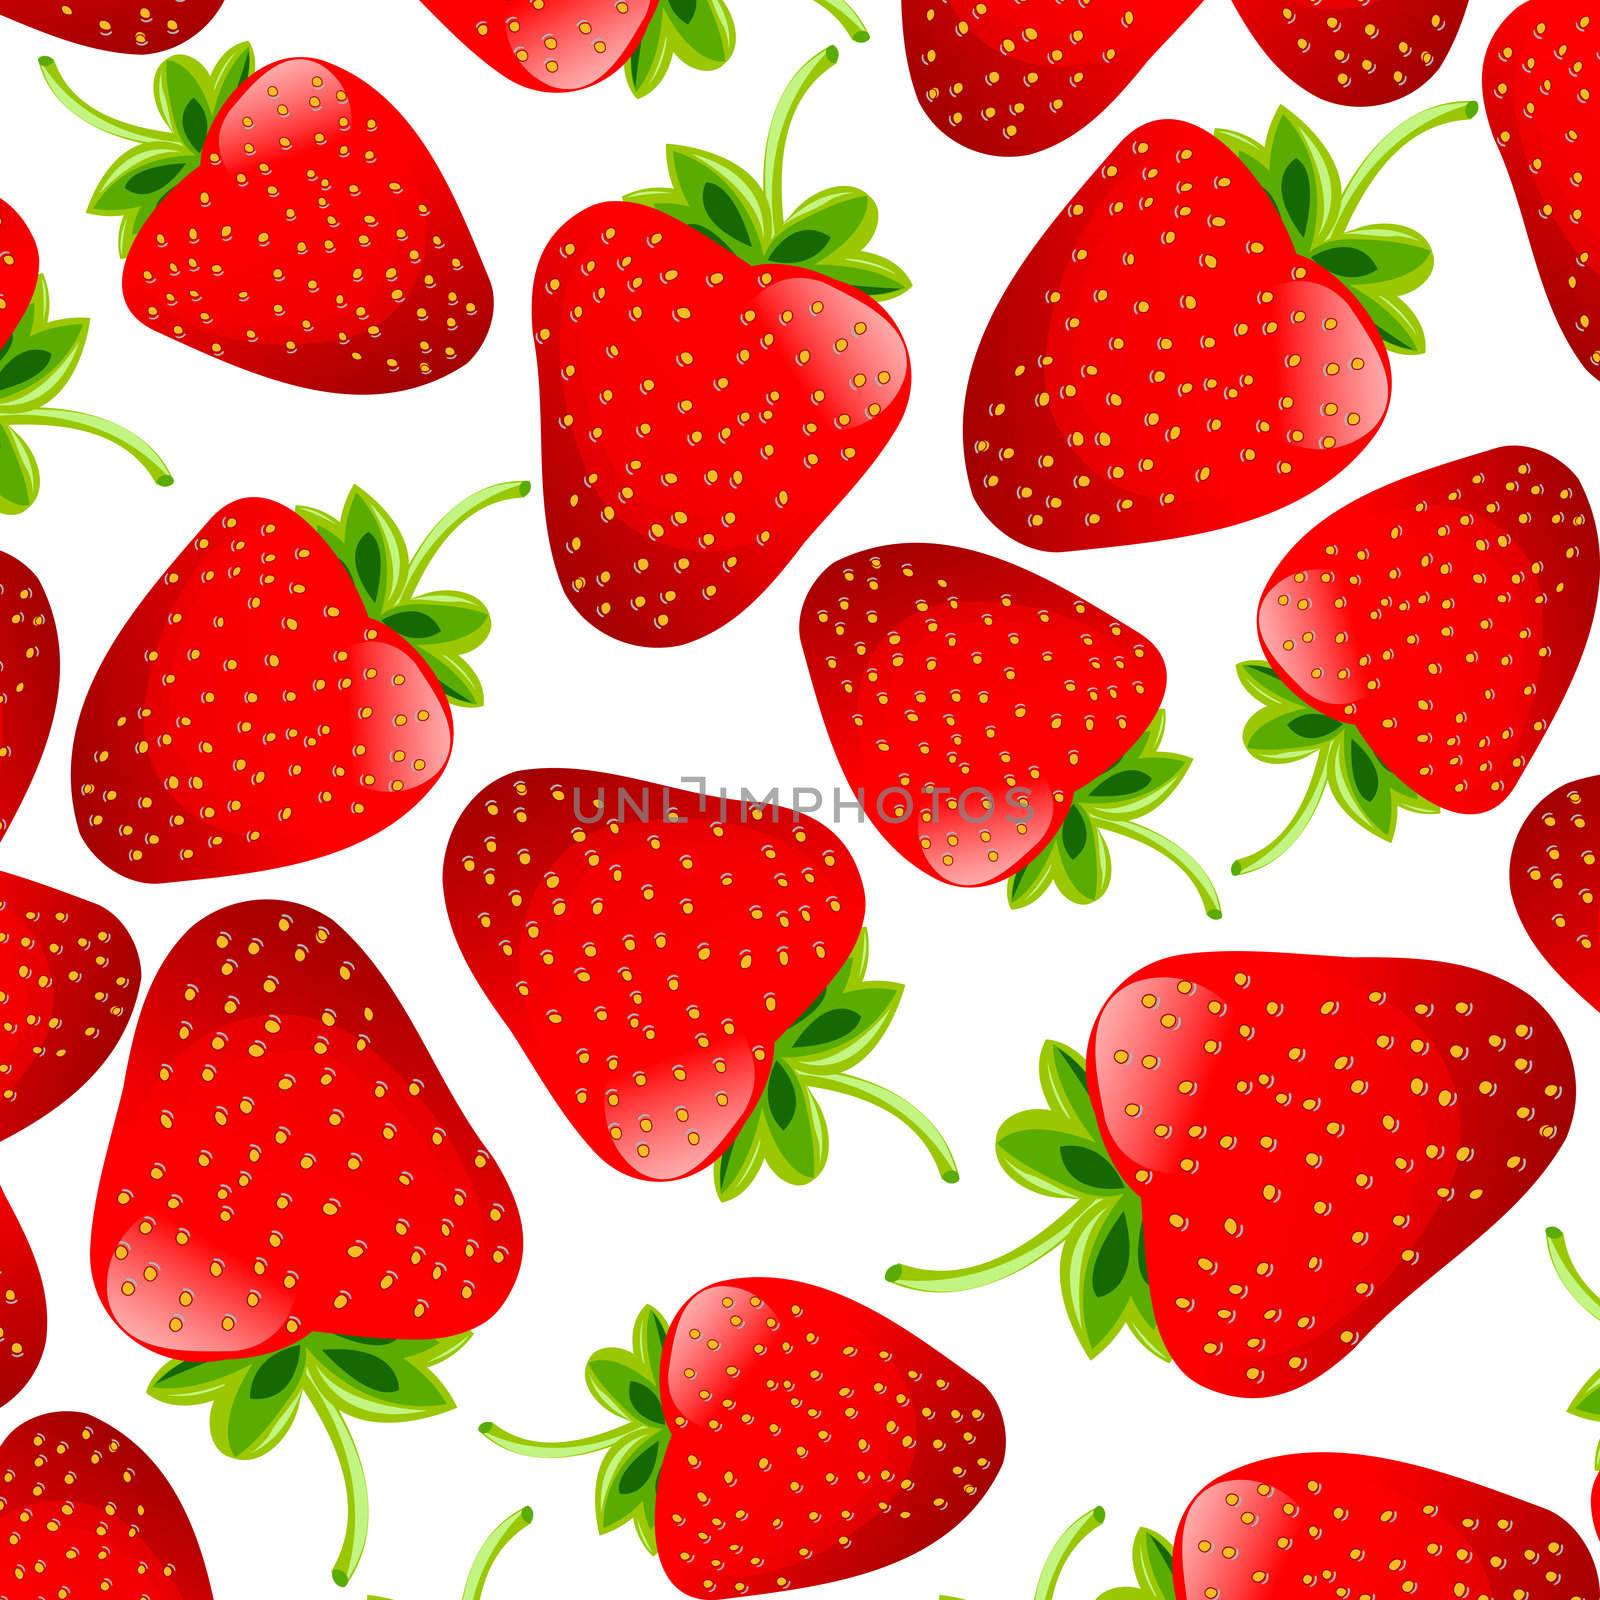 strawberries by Lirch